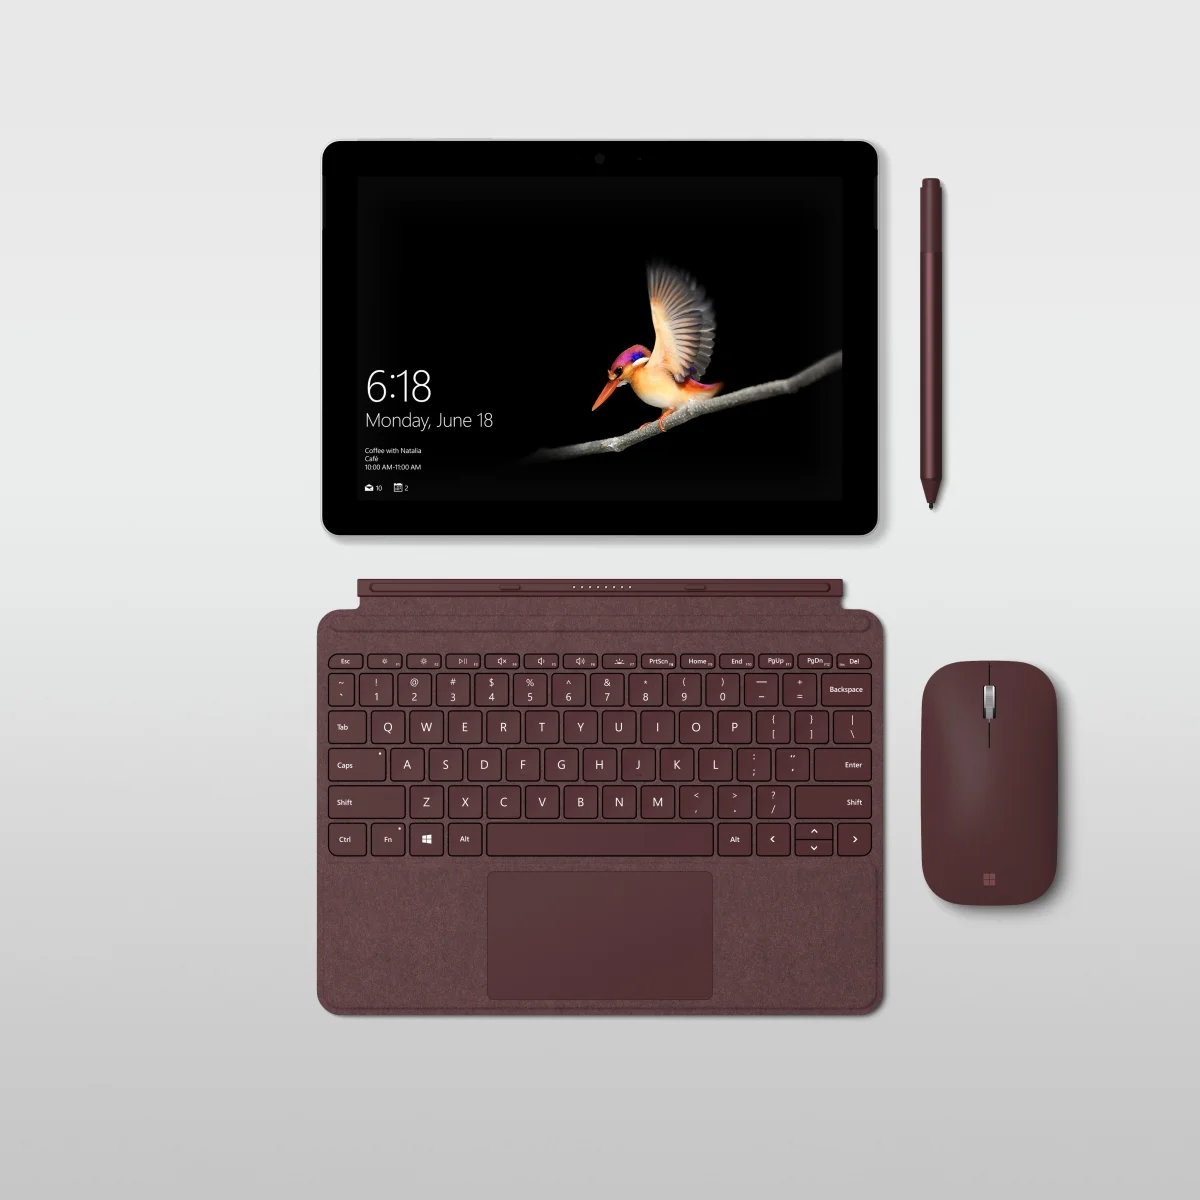 Microsoft представила дешёвый планшет Surface Go - фото 1